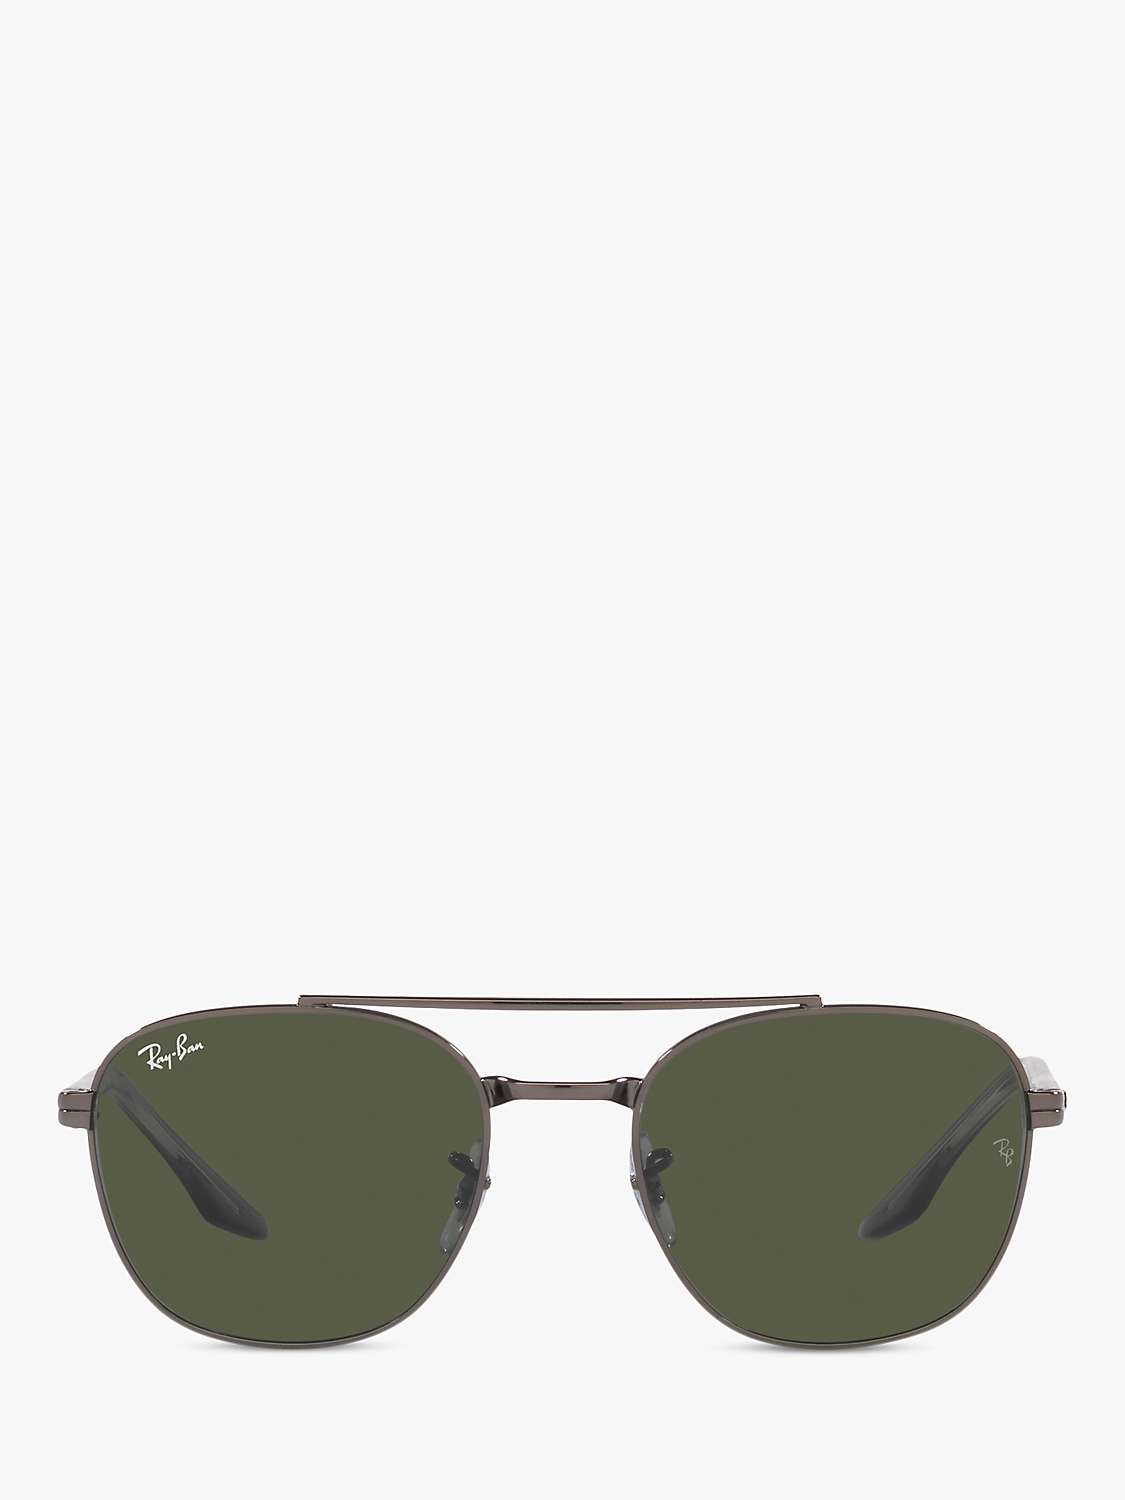 Buy Ray-Ban RB3688 Unisex Square Sunglasses, Gunmetal/Green Online at johnlewis.com